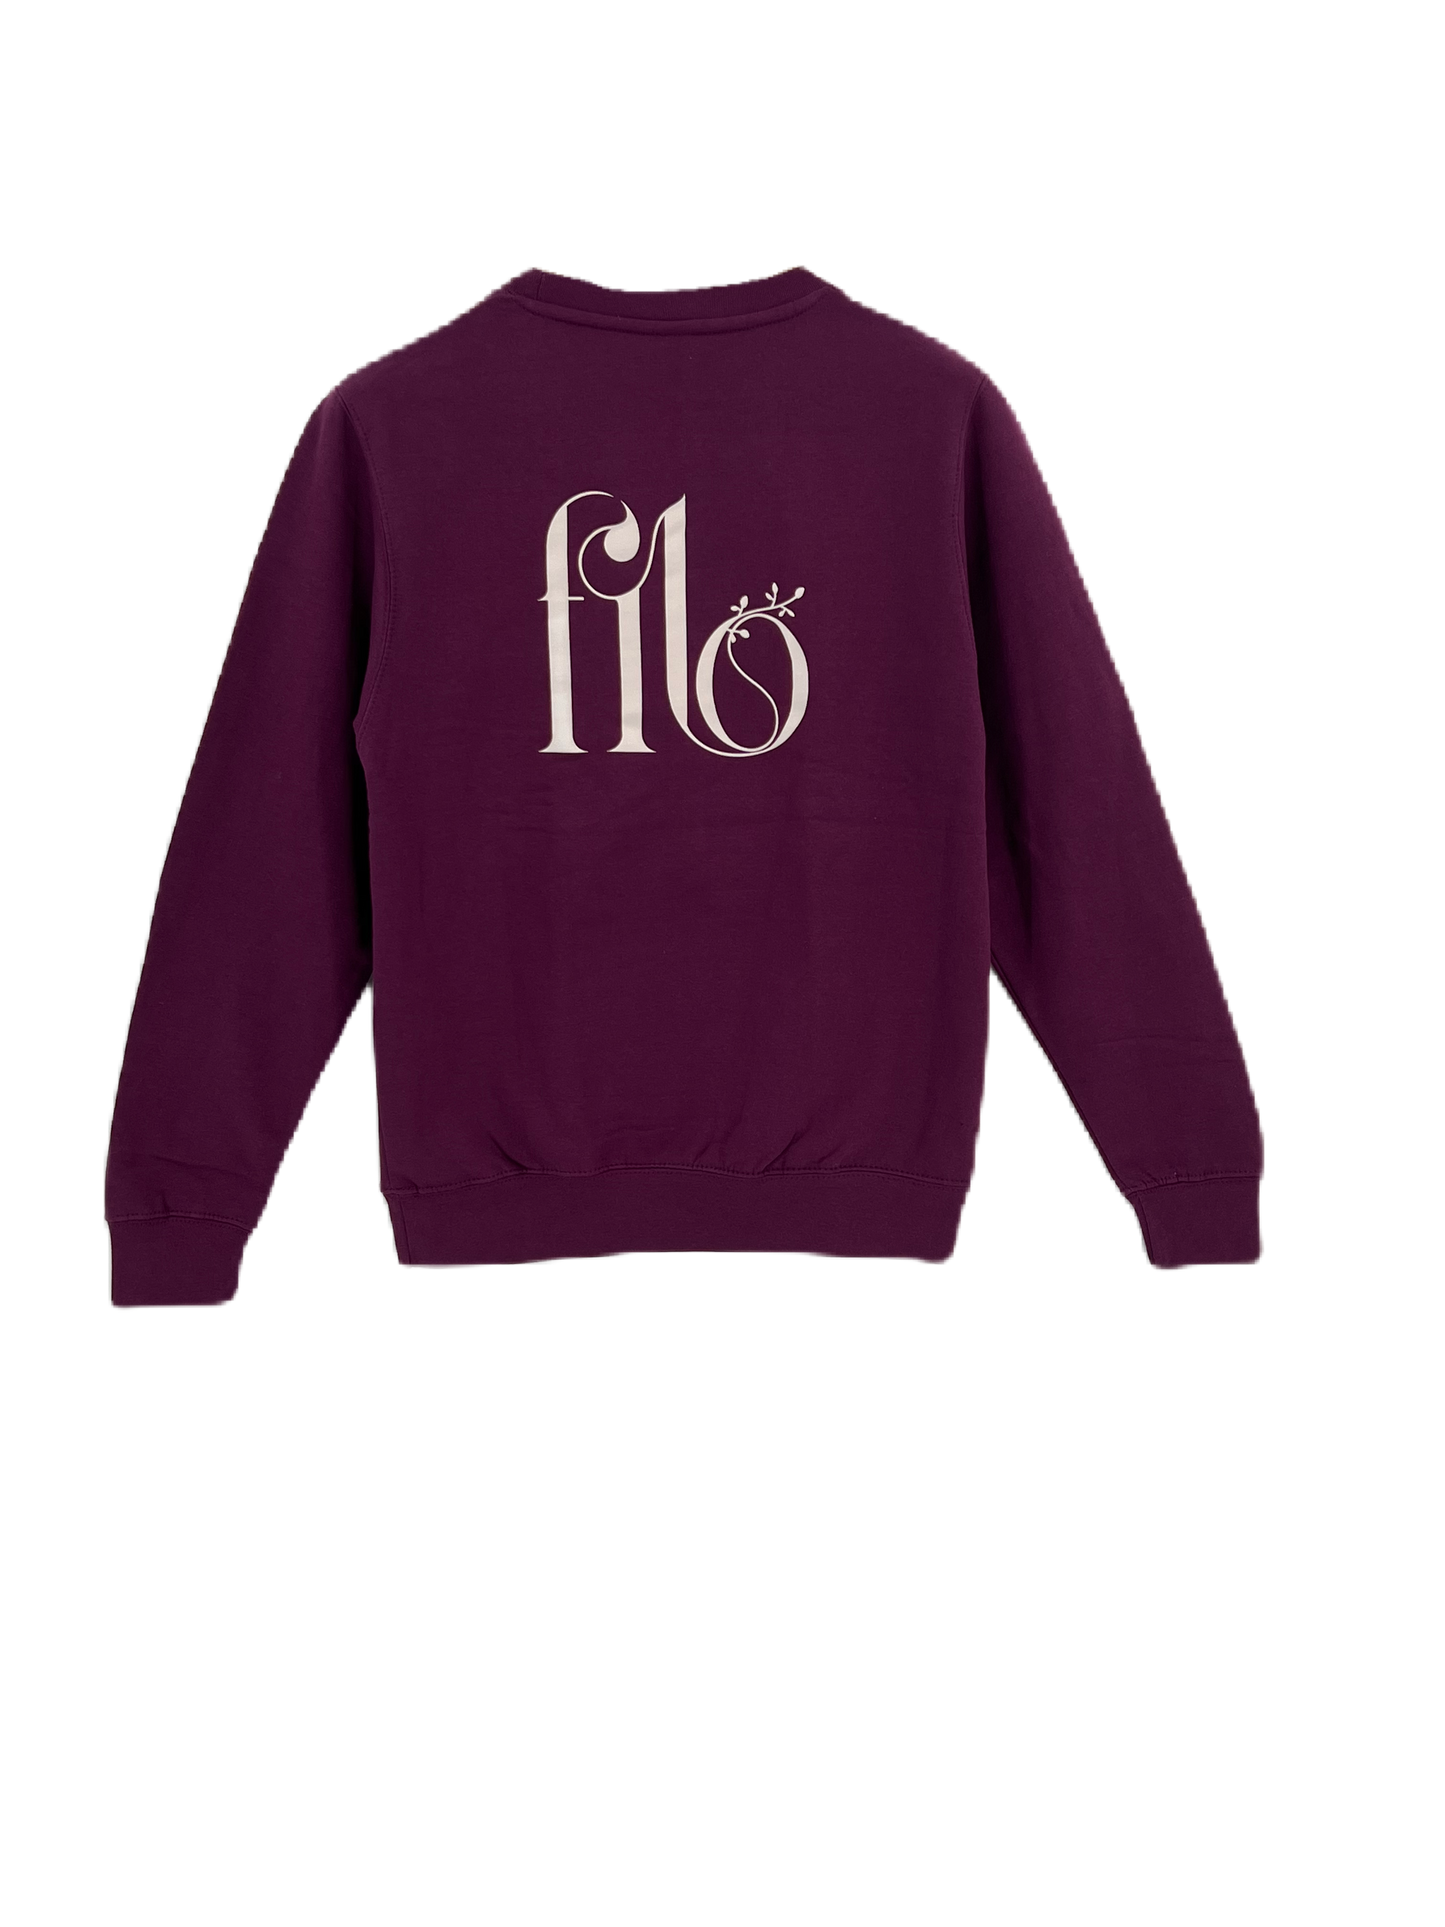 Filo sweater